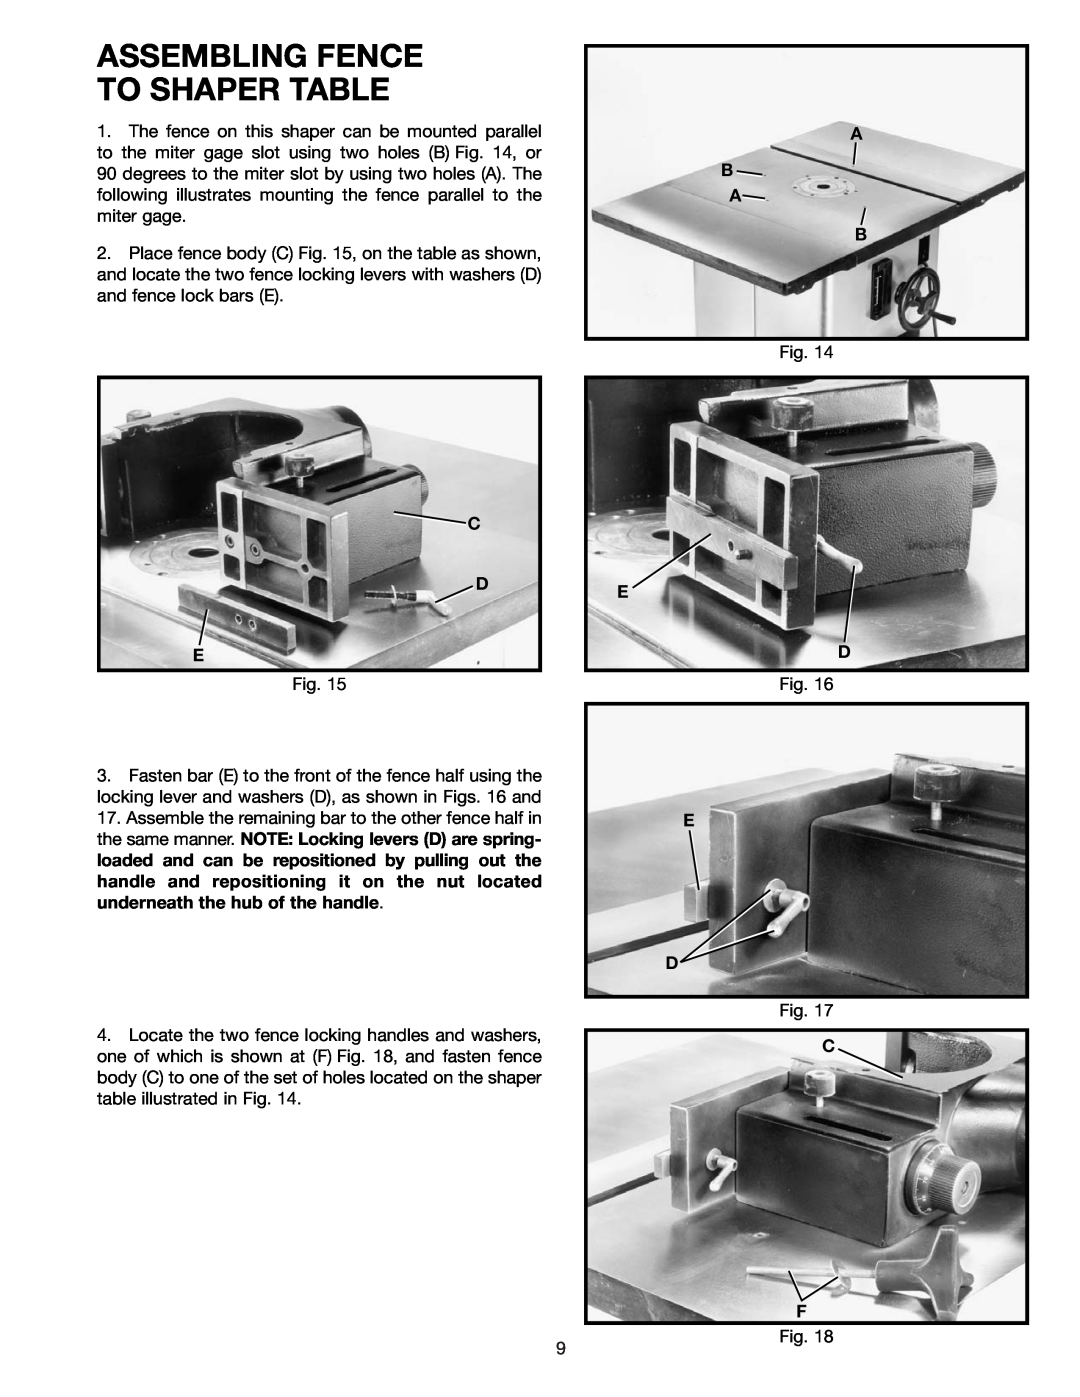 Delta 43-424 instruction manual Assembling Fence To Shaper Table, C D E 